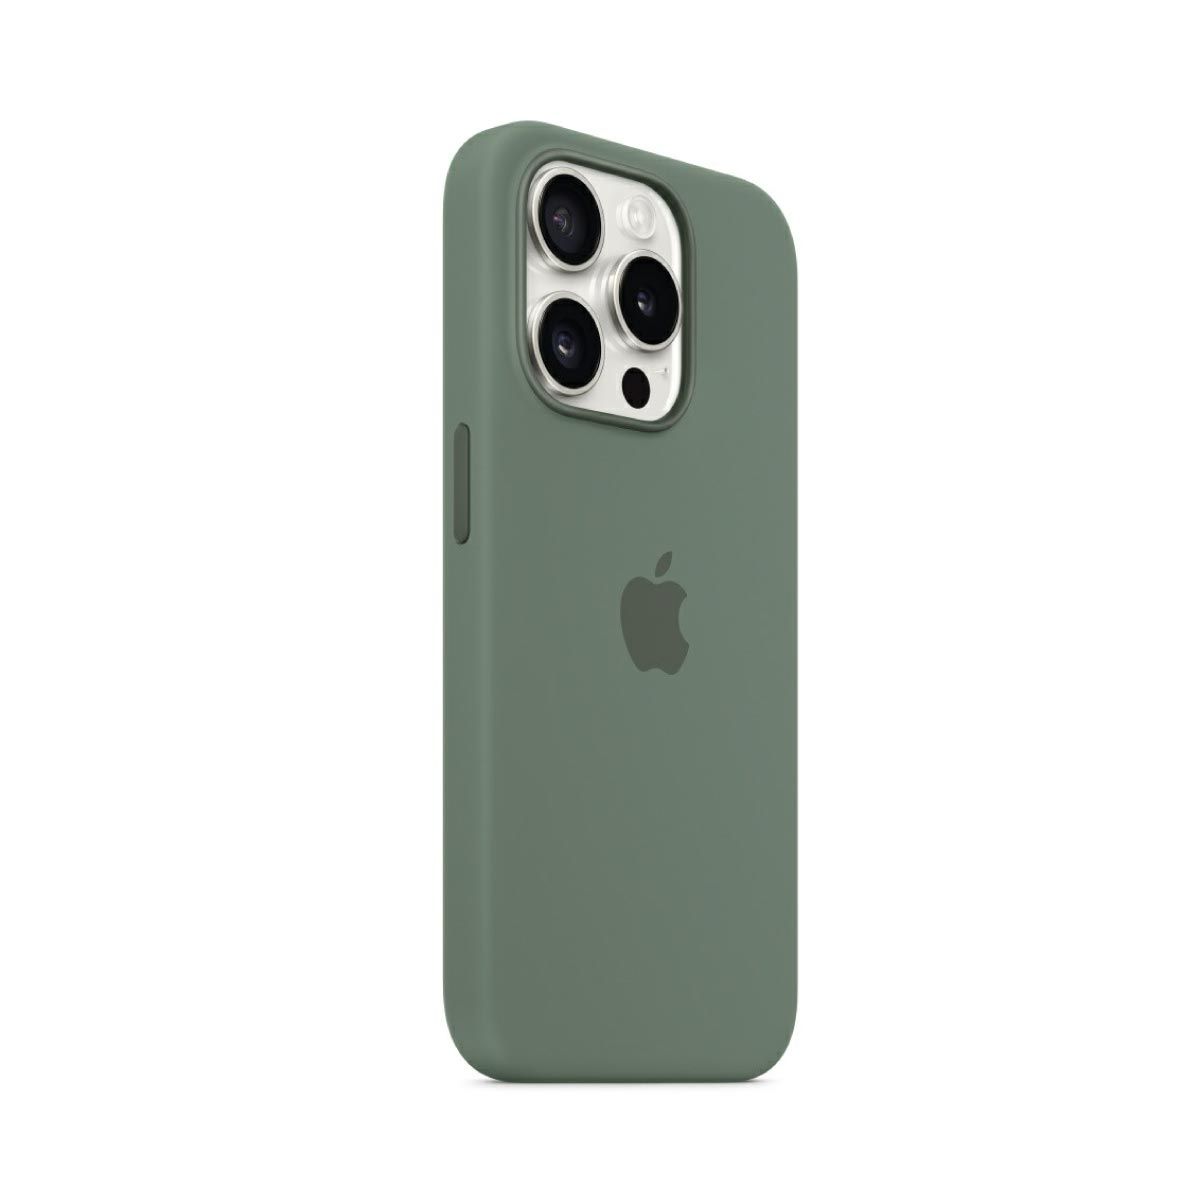 Apple Case เคสซิลิโคนสำหรับ iPhone 15 Pro พร้อม MagSafe -สีเขียวไซเปรส